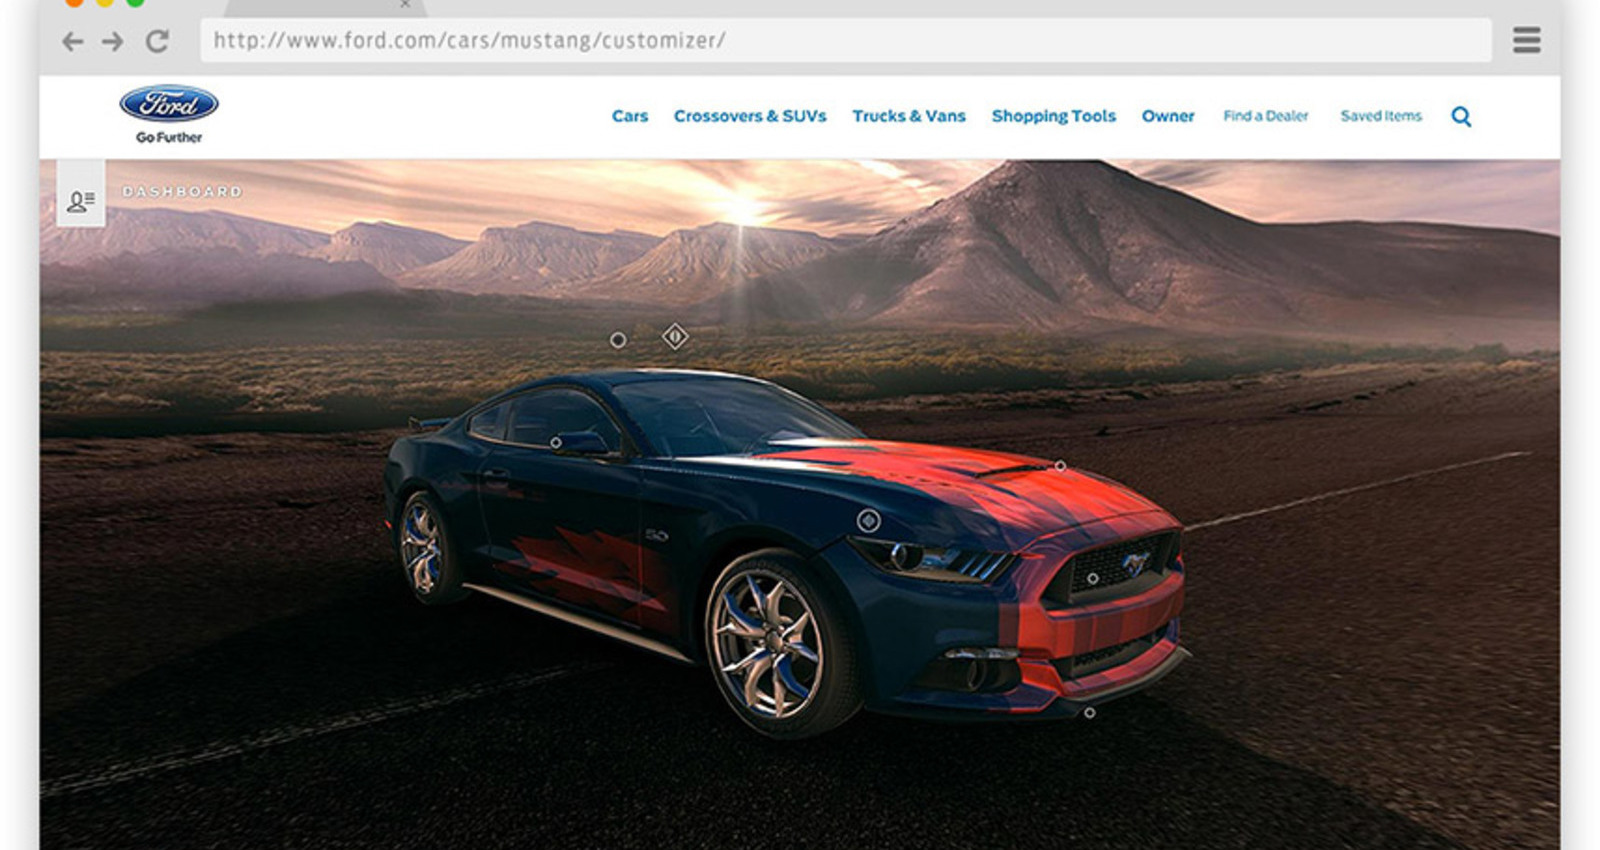 The 2015 Mustang Customizer